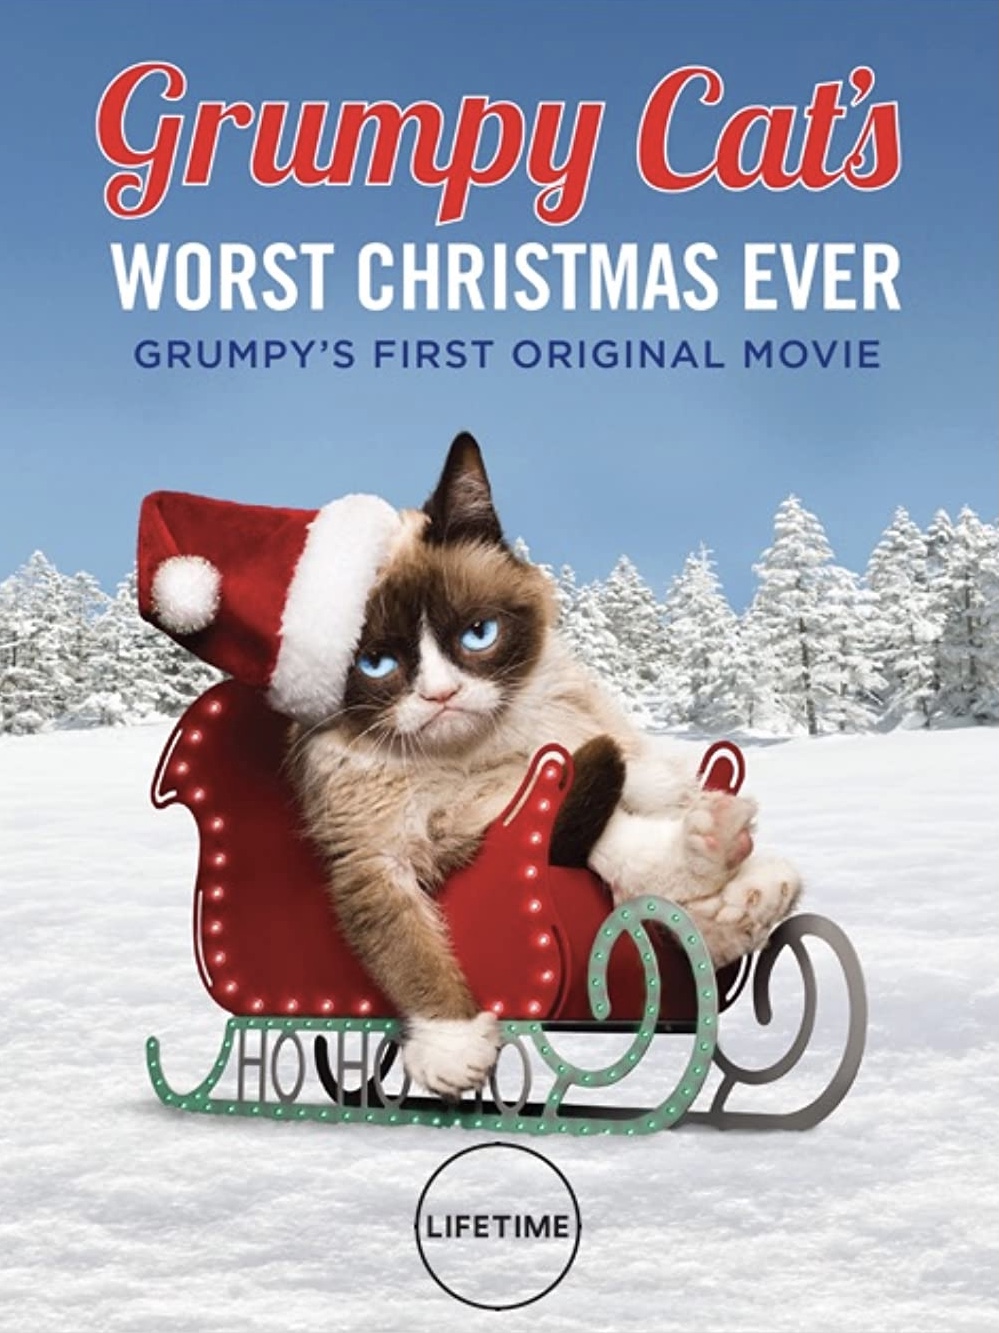 Grump cats worst christmas ever.jpeg